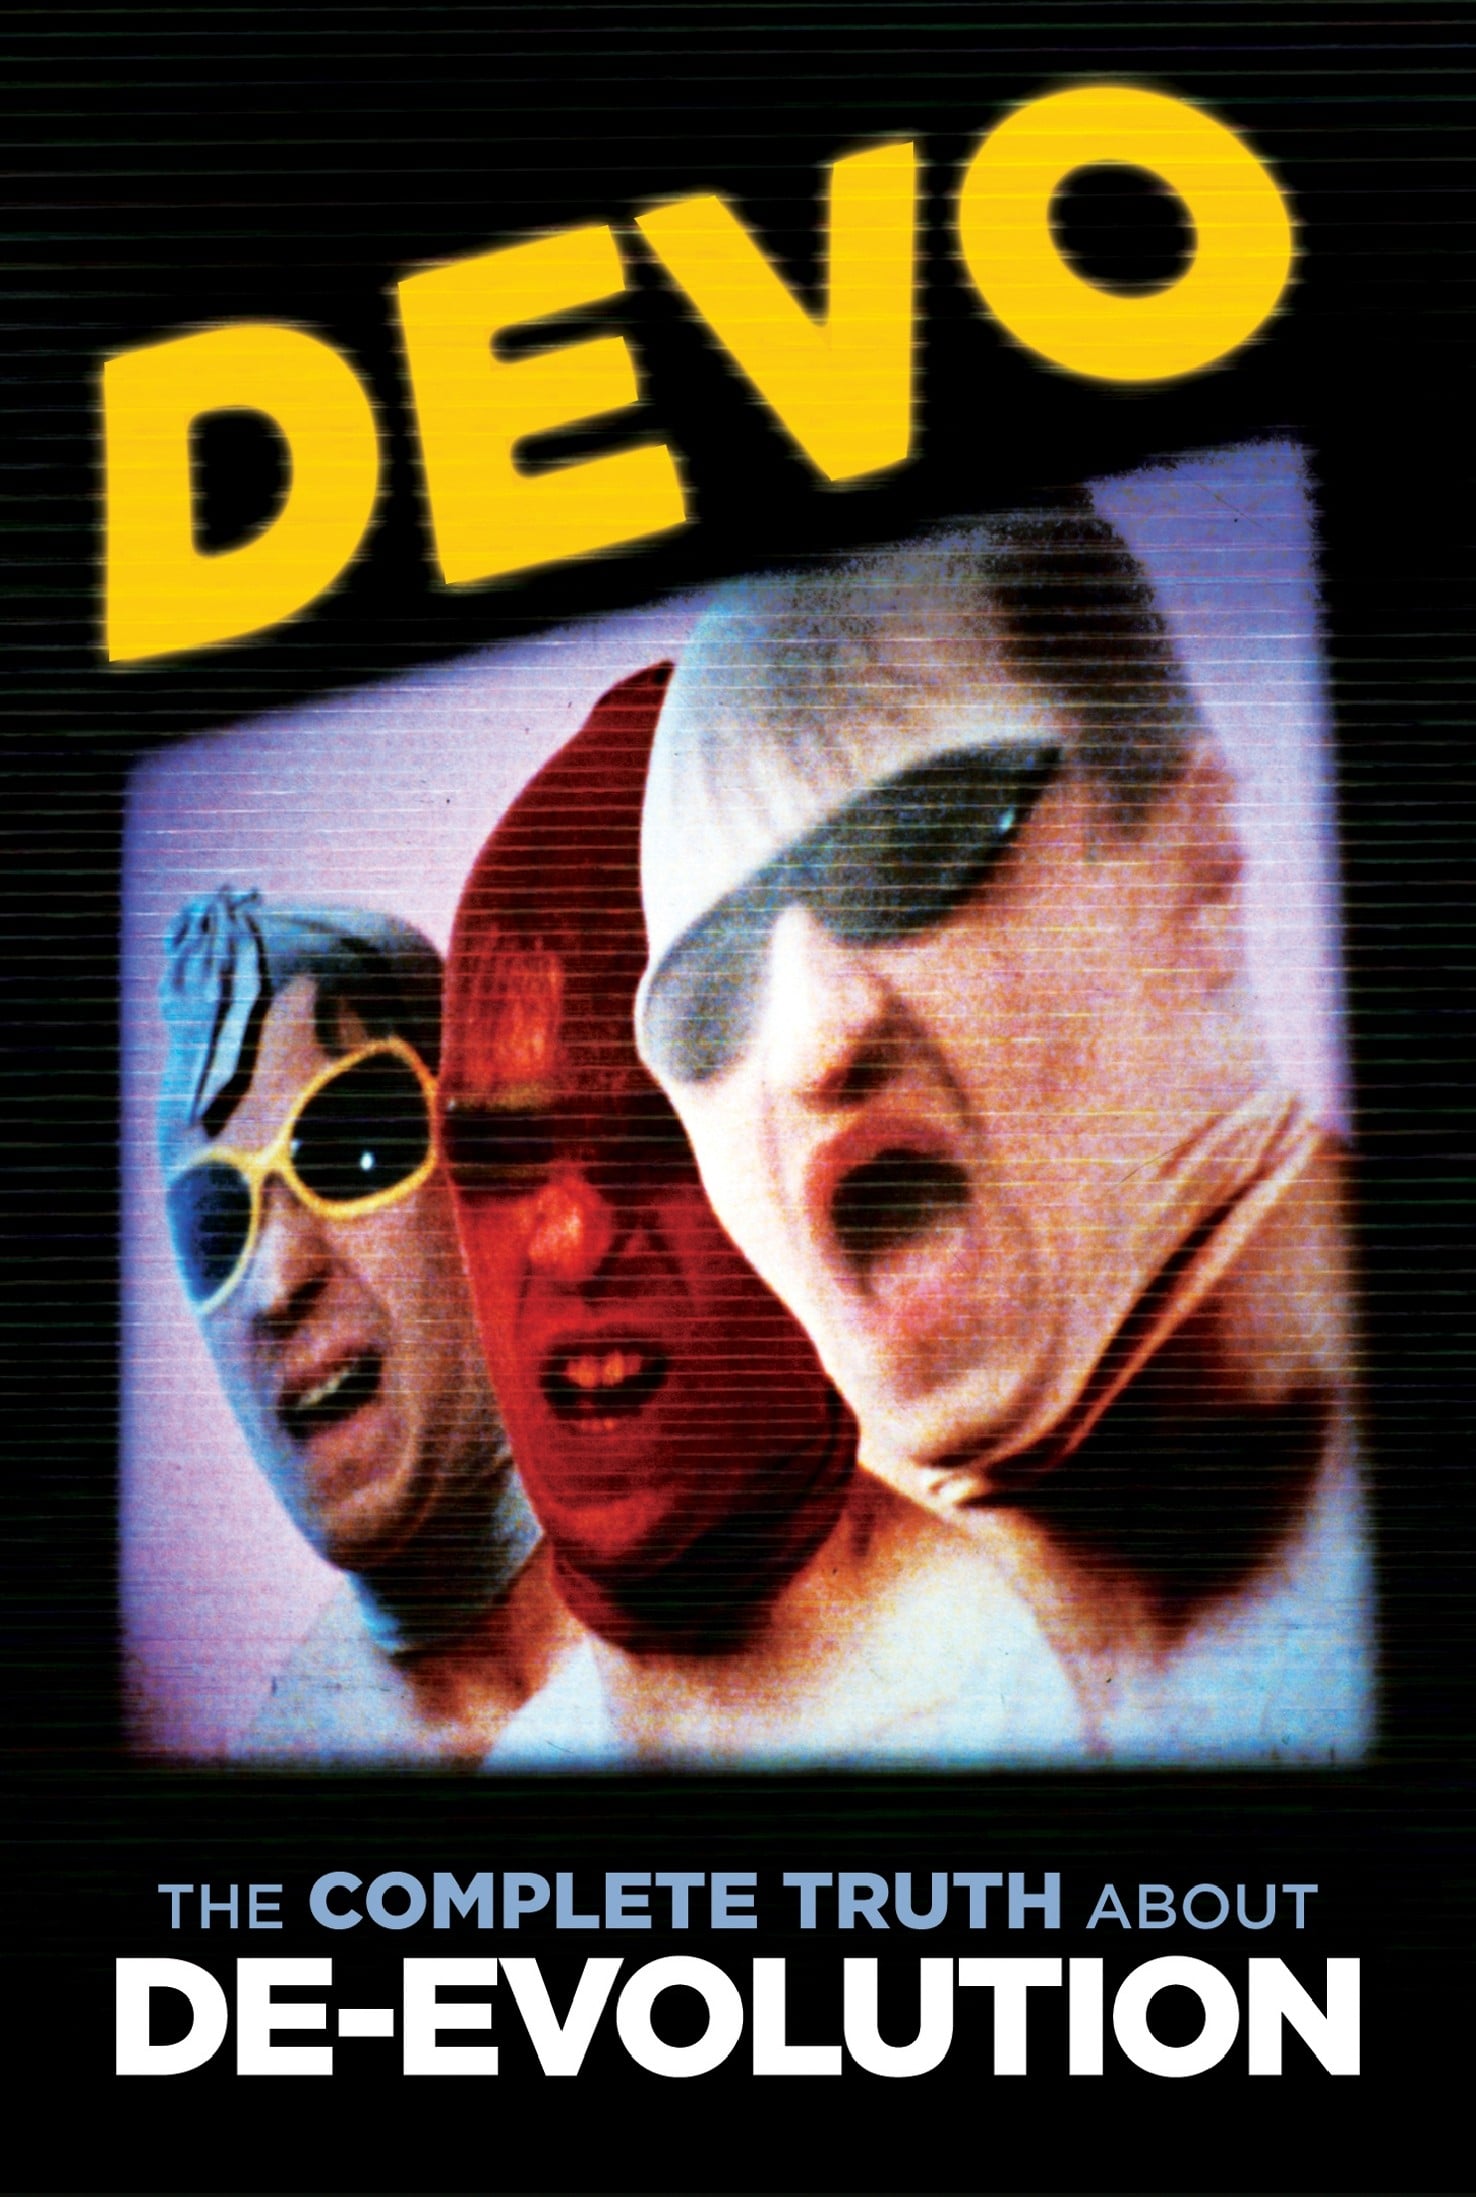 Devo: The Complete Truth About De-Evolution (1993)